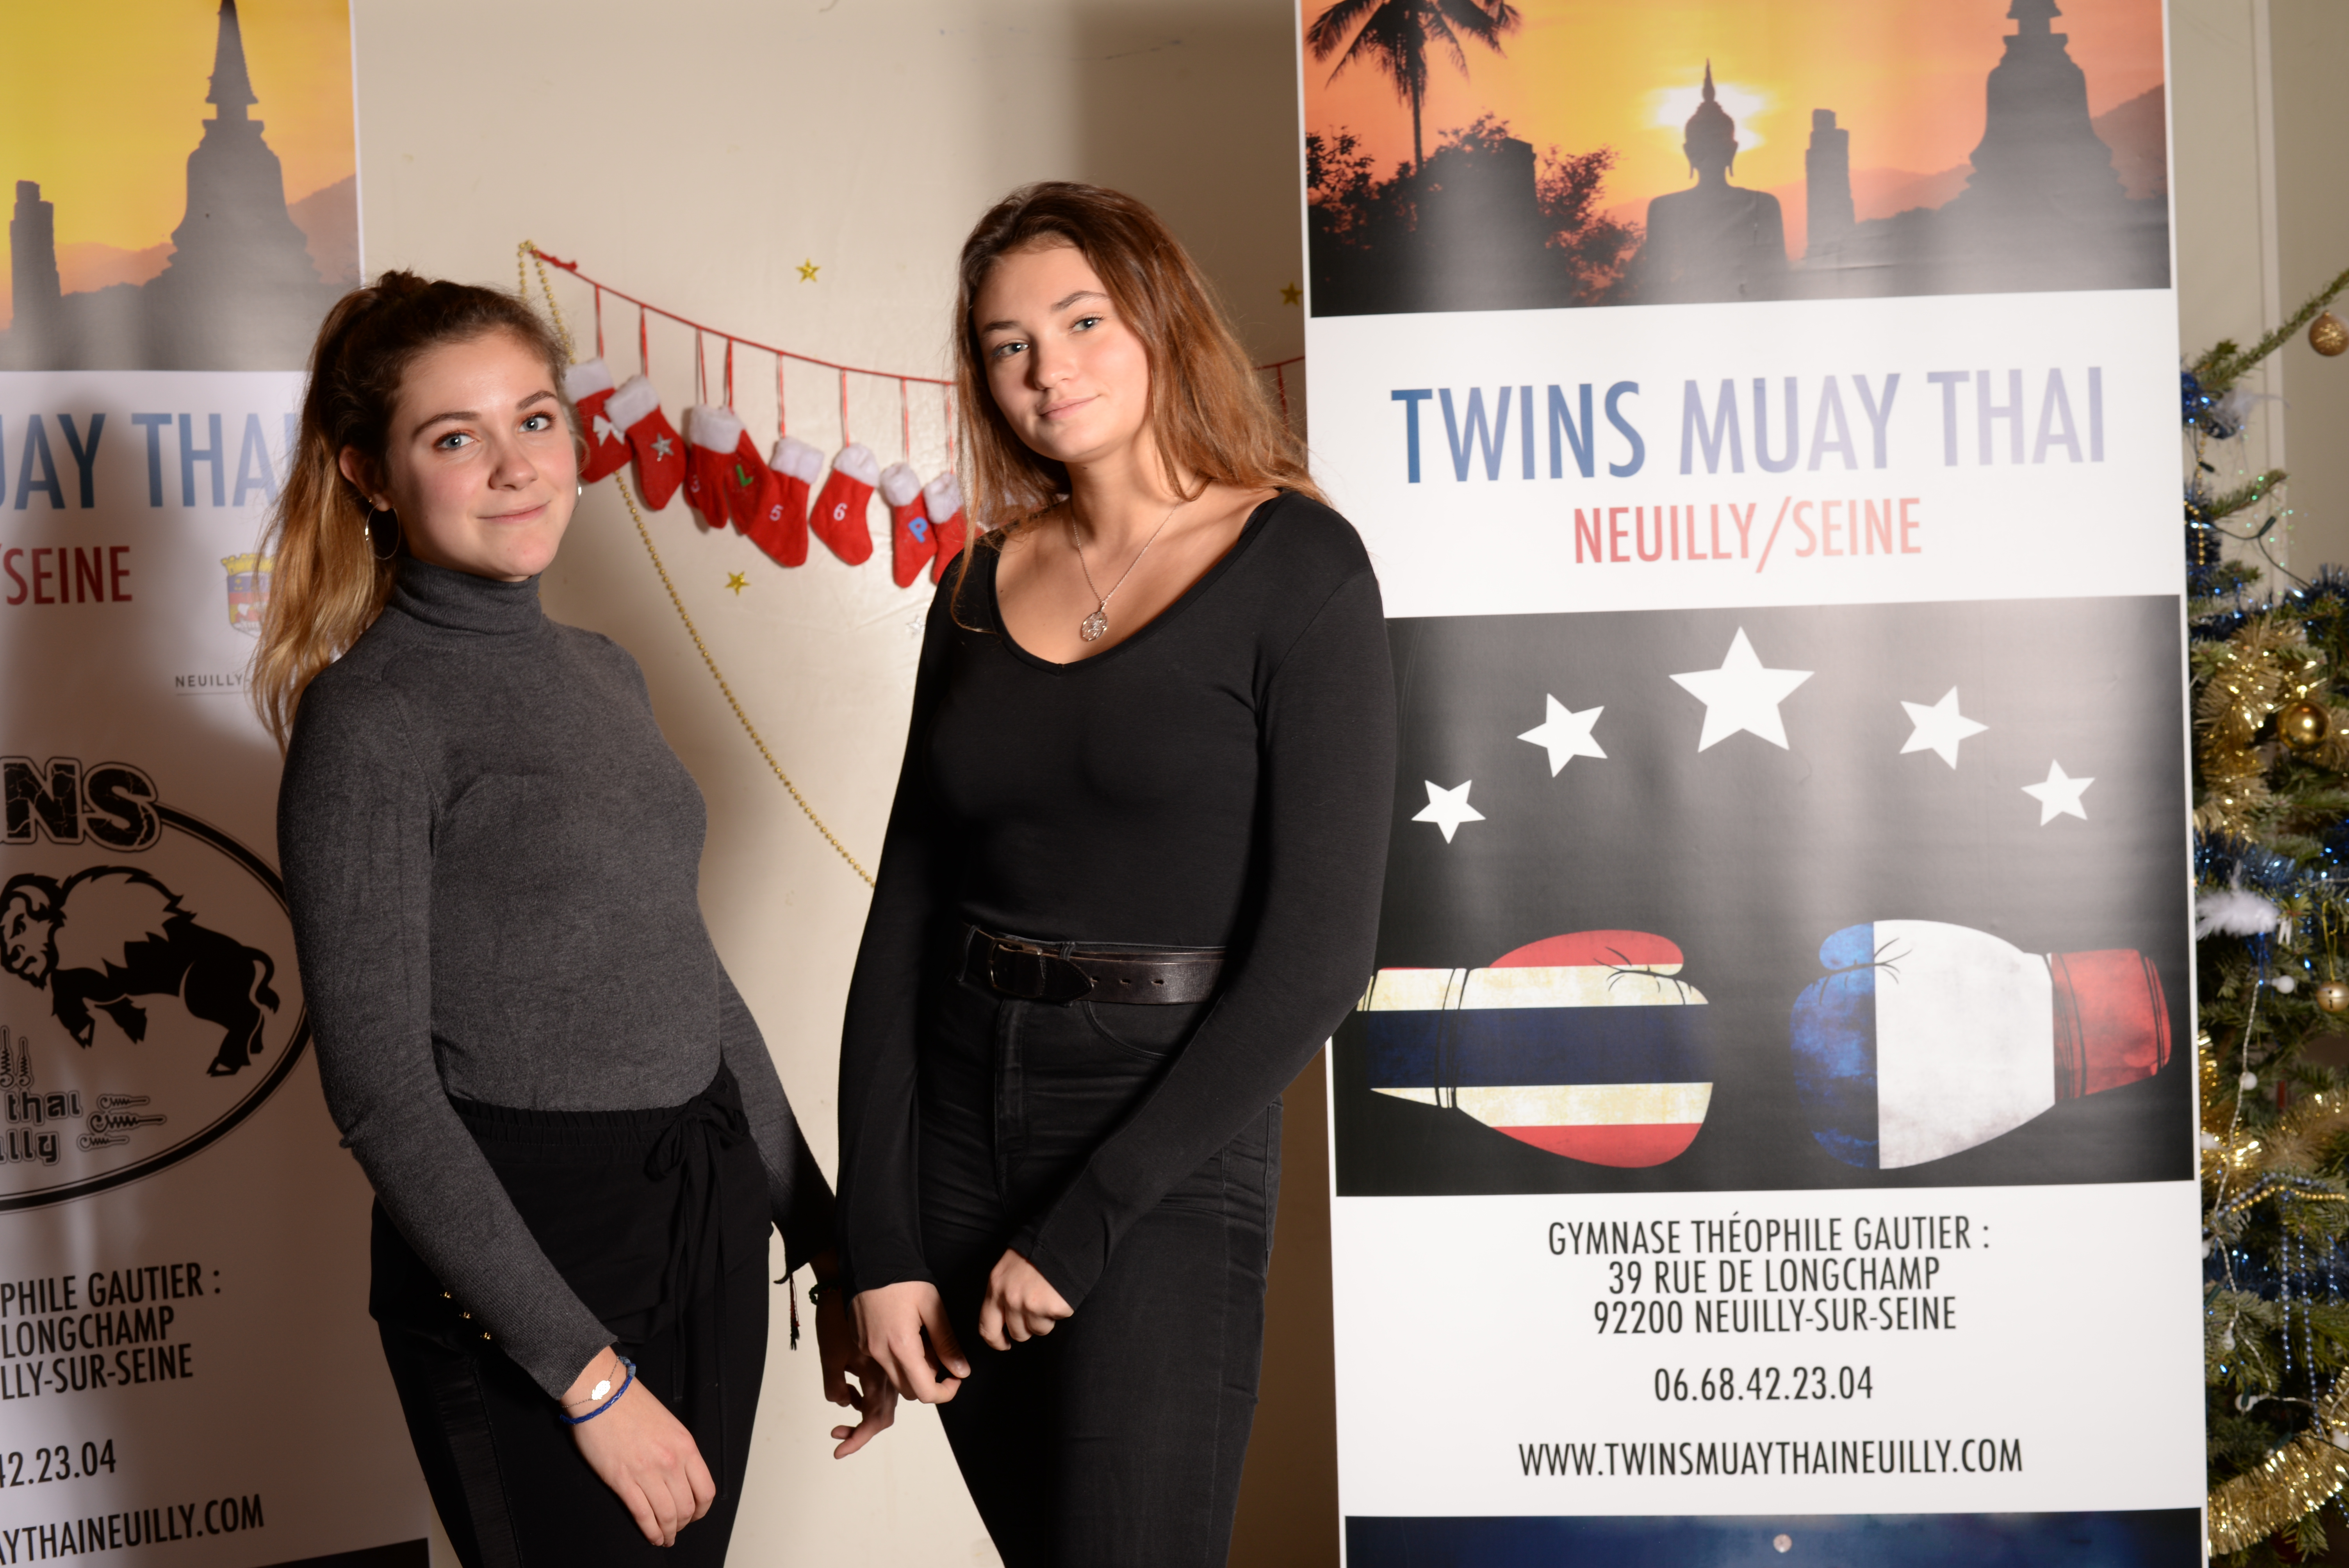 Twins Muay Thaï Neuilly